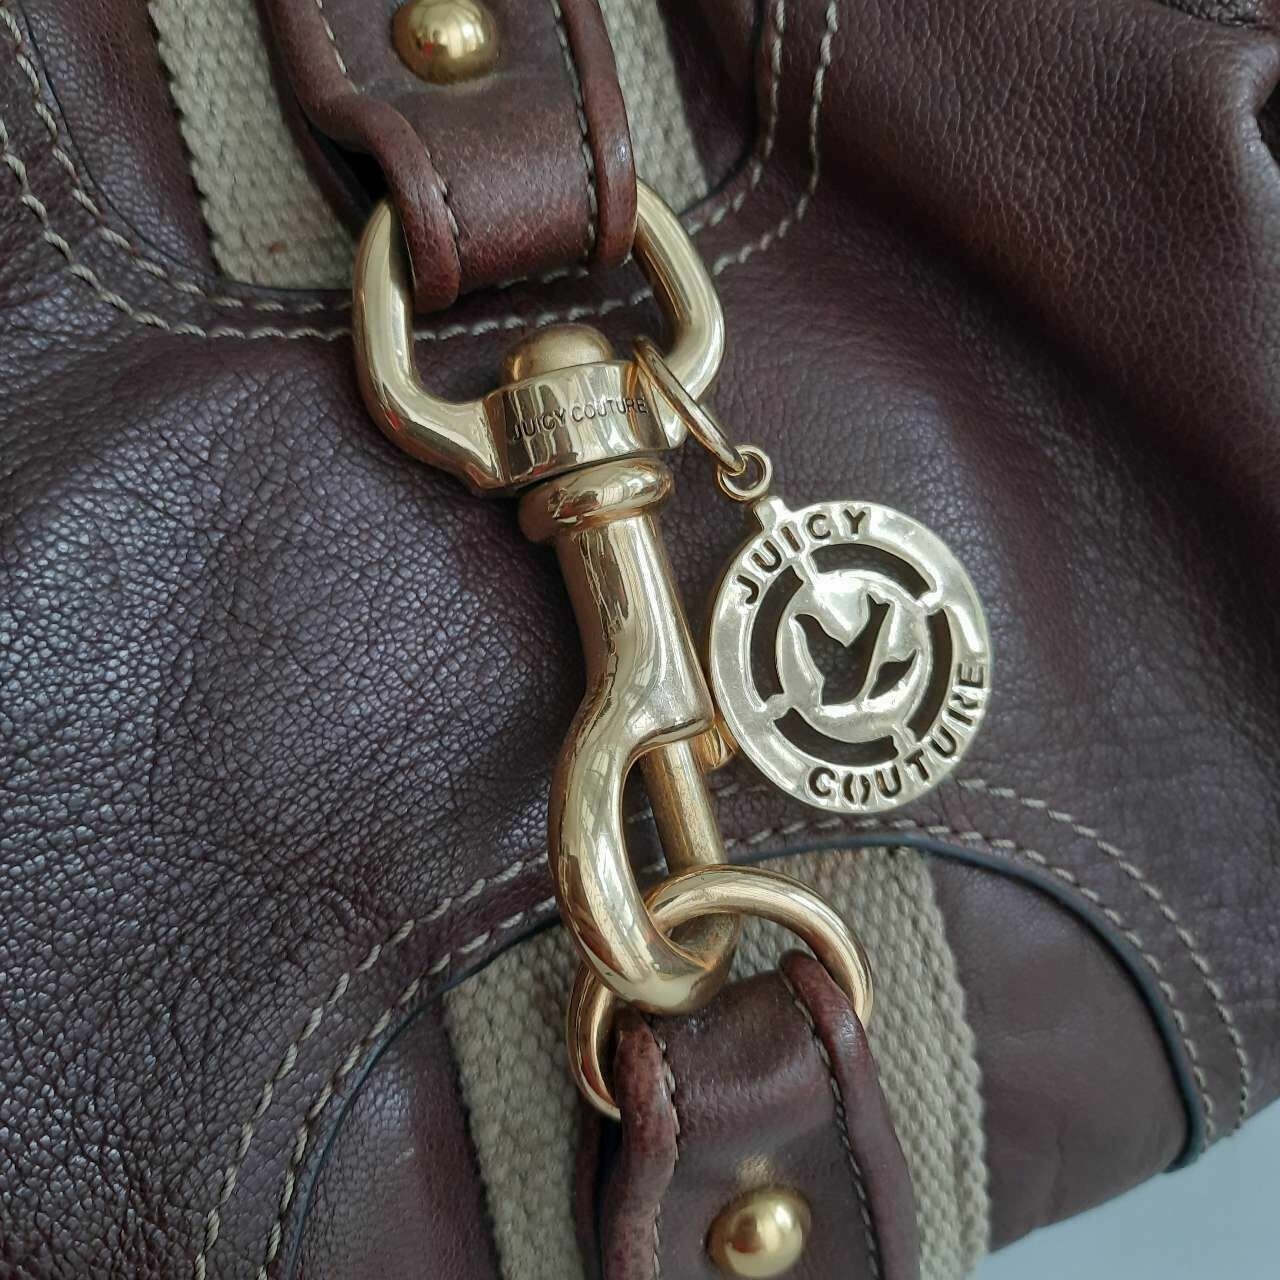 Juicy Couture Brown Leather Handbag